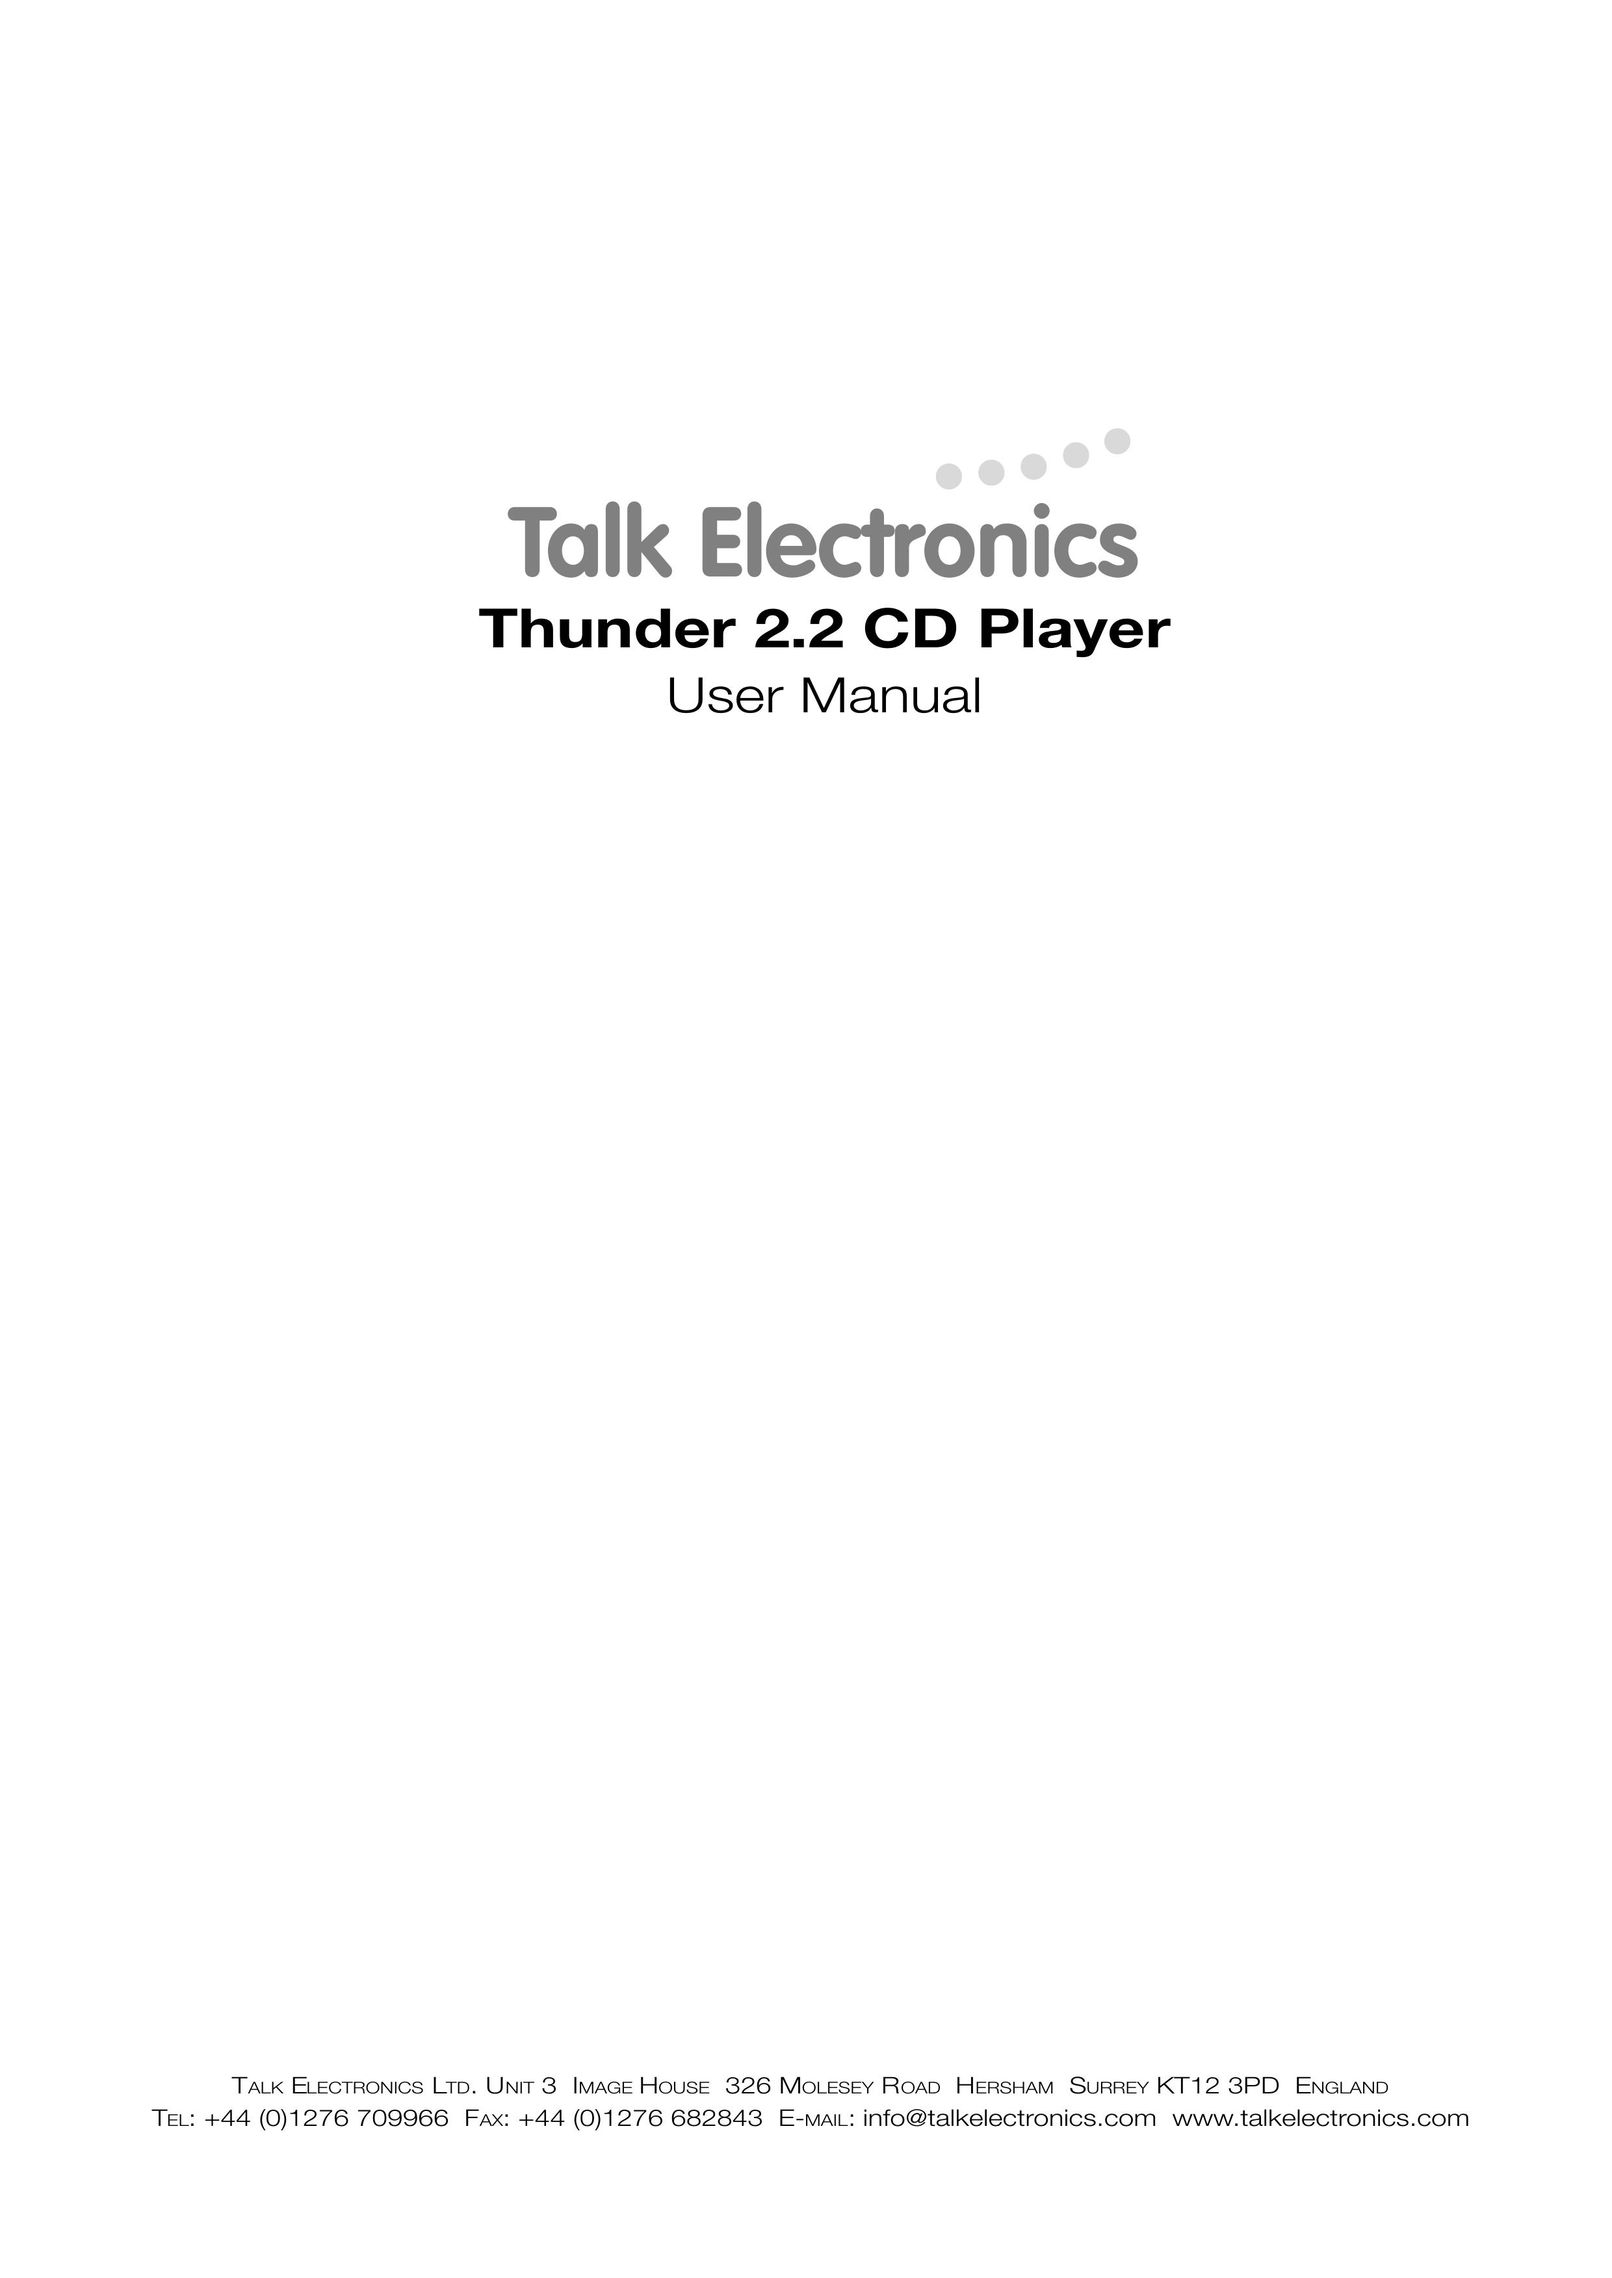 Talk electronic Thunder 2.2 CD Player User Manual